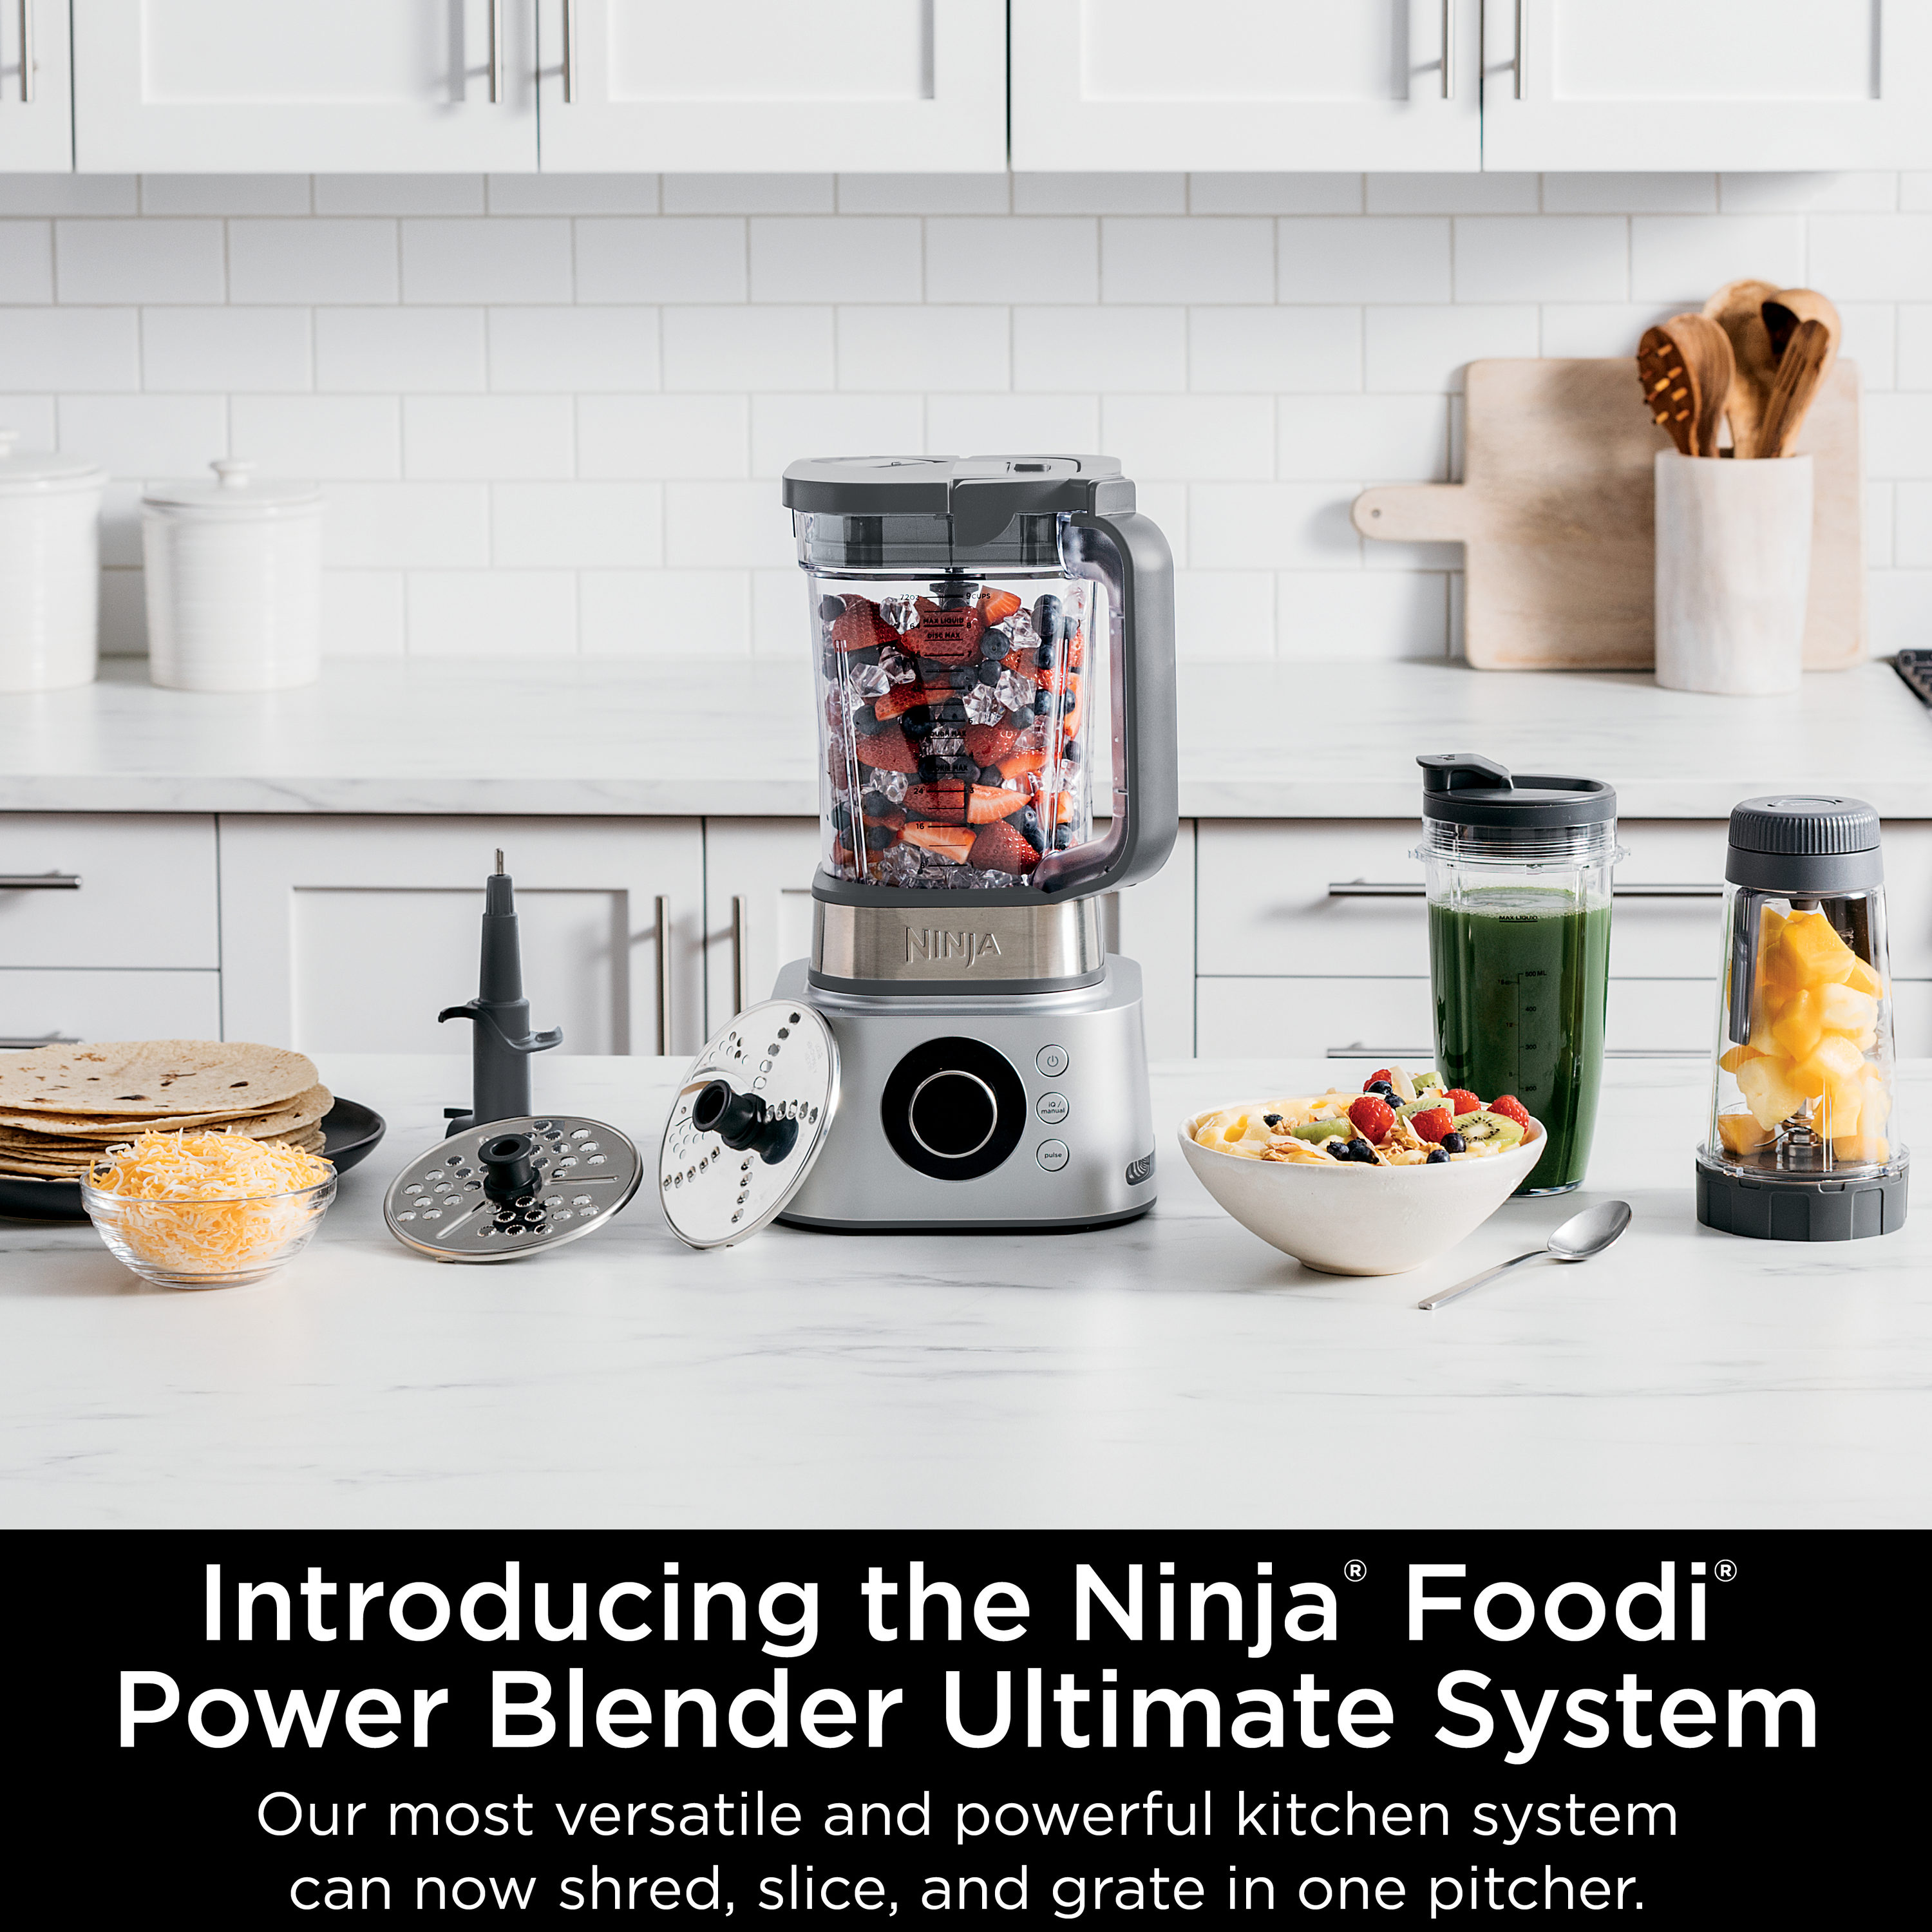 Ninja Detect Kitchen System Power Blender + Processor Pro with